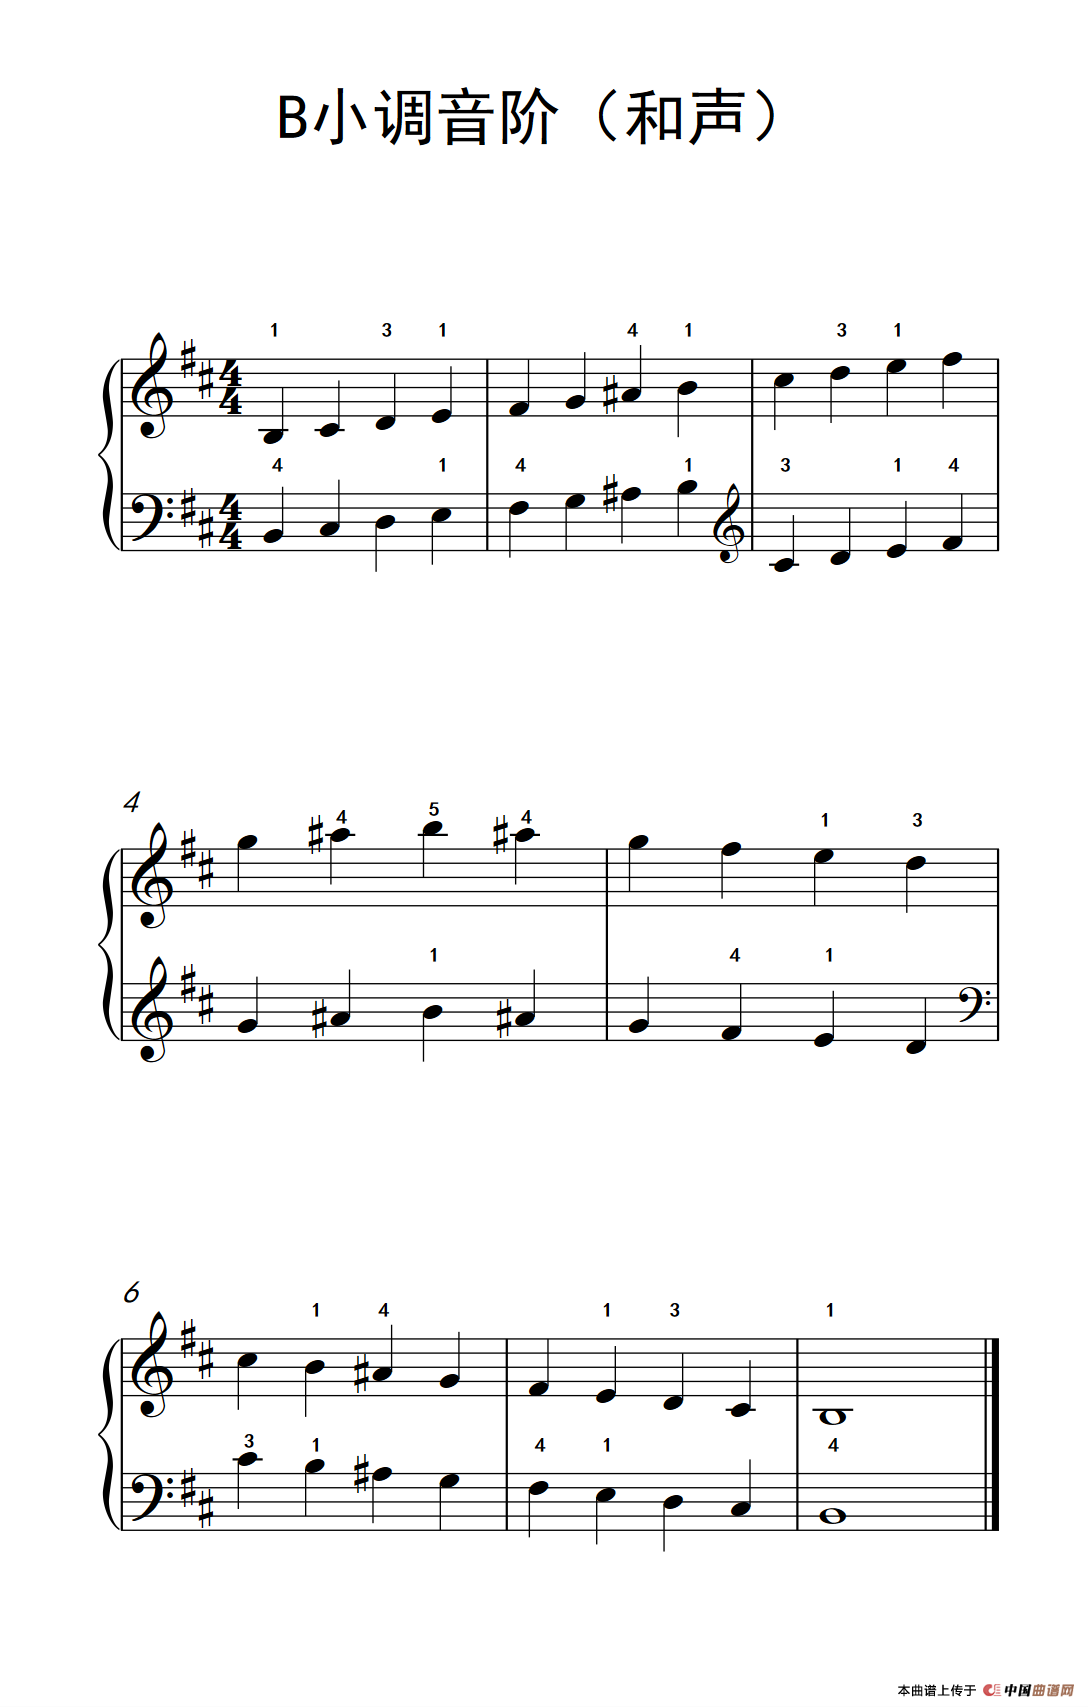 《B小调音阶》钢琴曲谱图分享